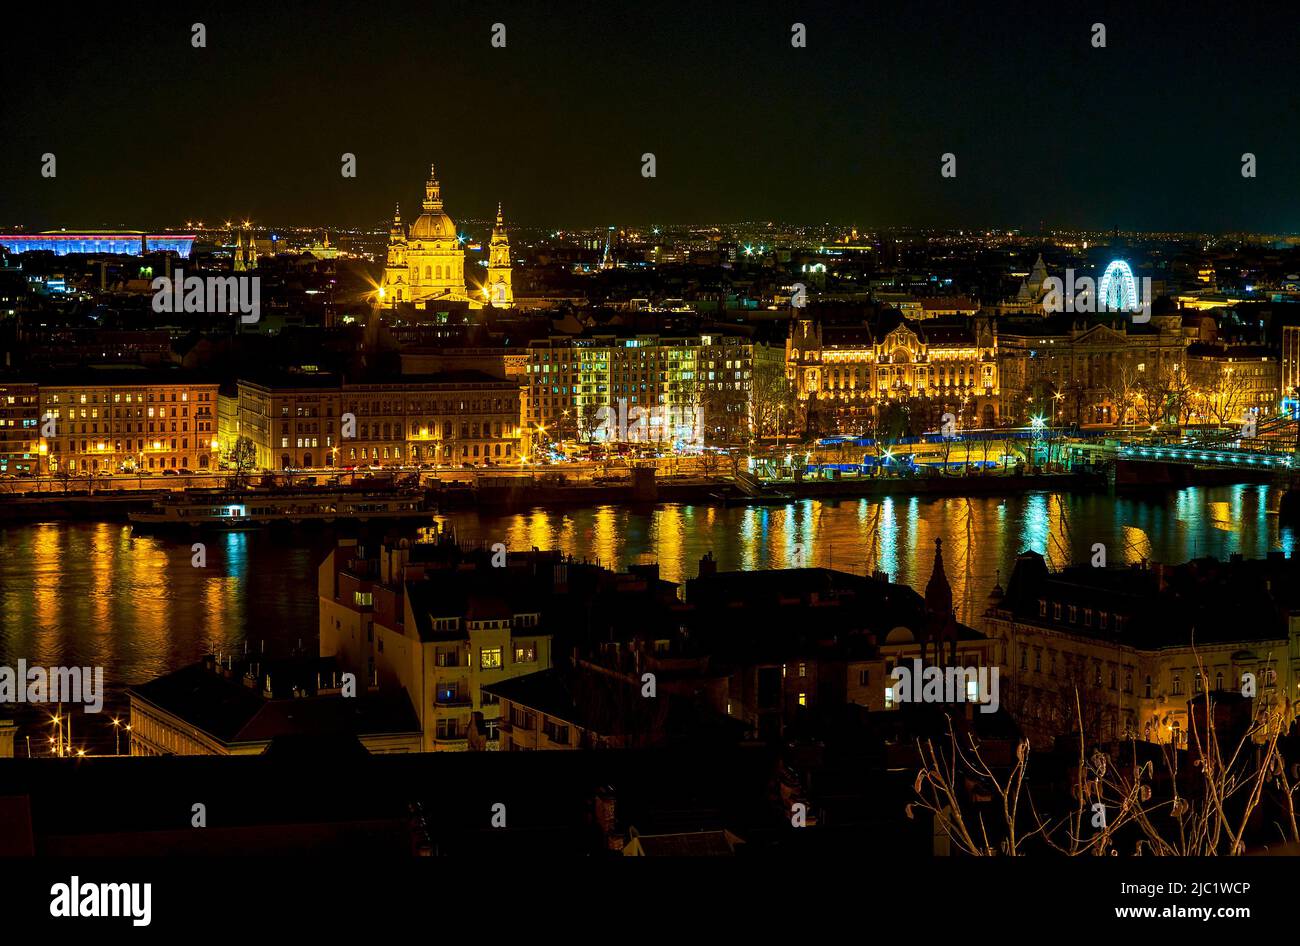 The night bright illumination of Pest's landmarks, Budapest, Hungary Stock Photo